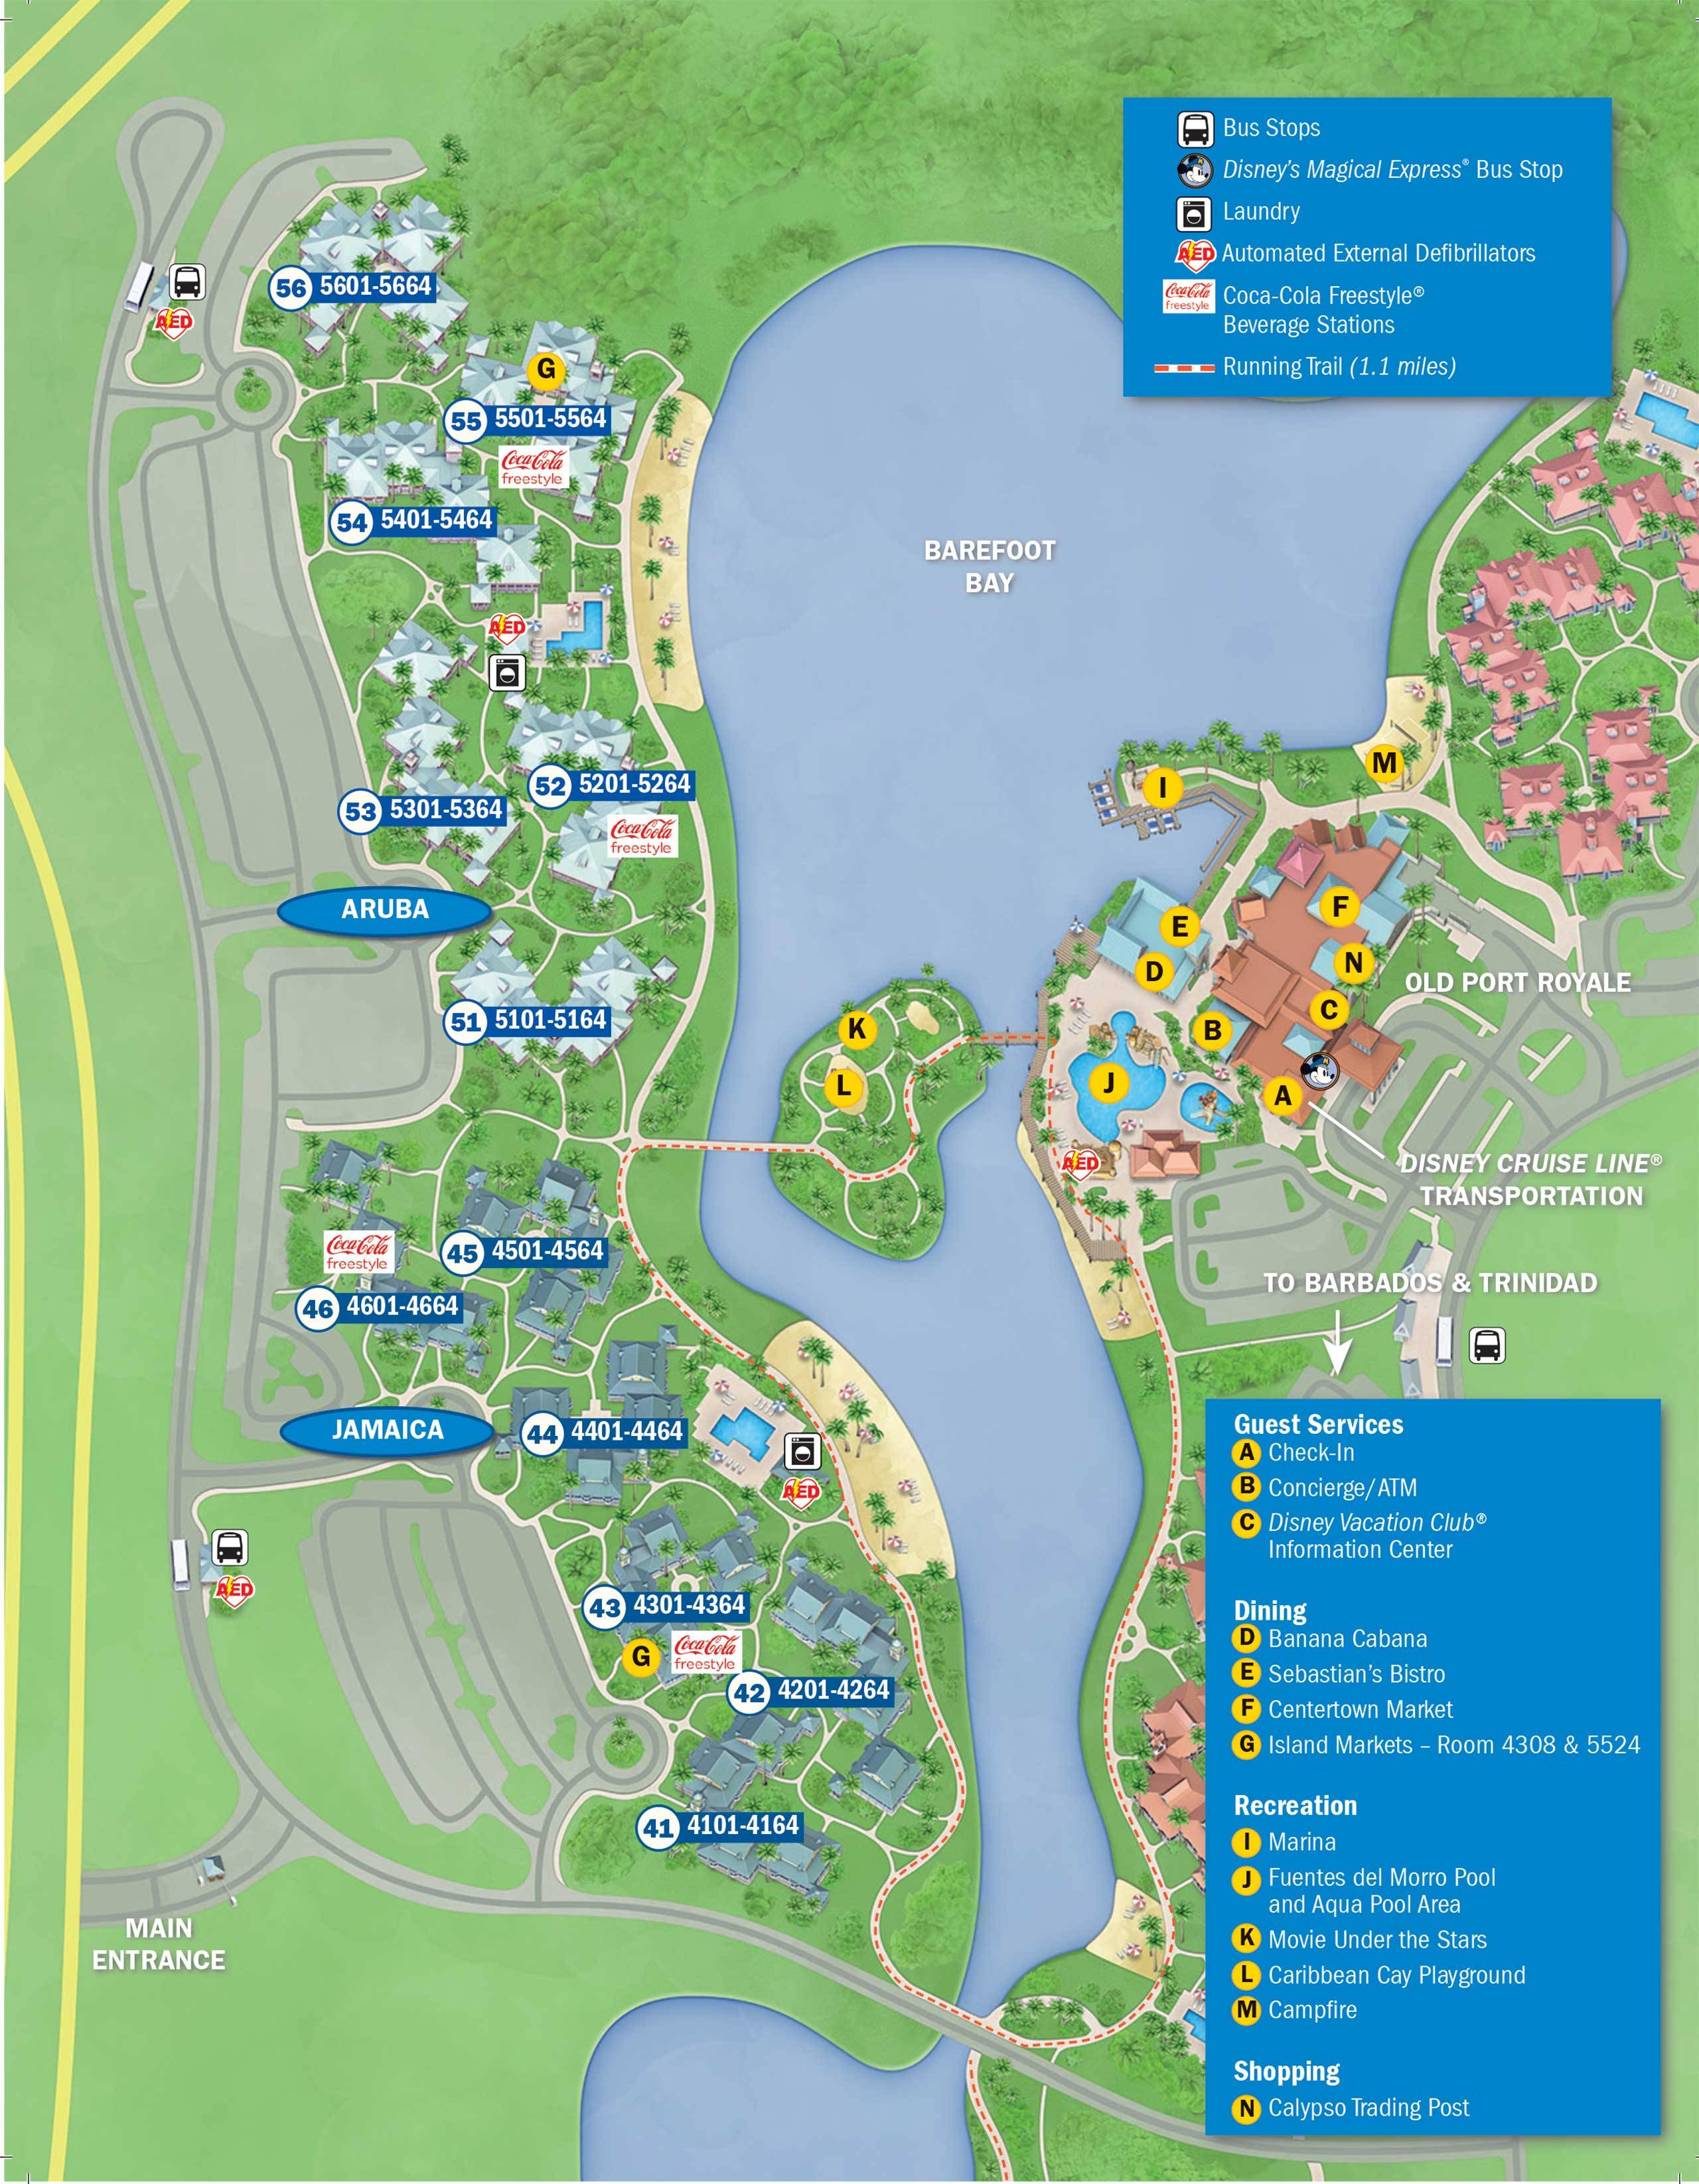 Updated Disney's Caribbean Beach Resort map - back